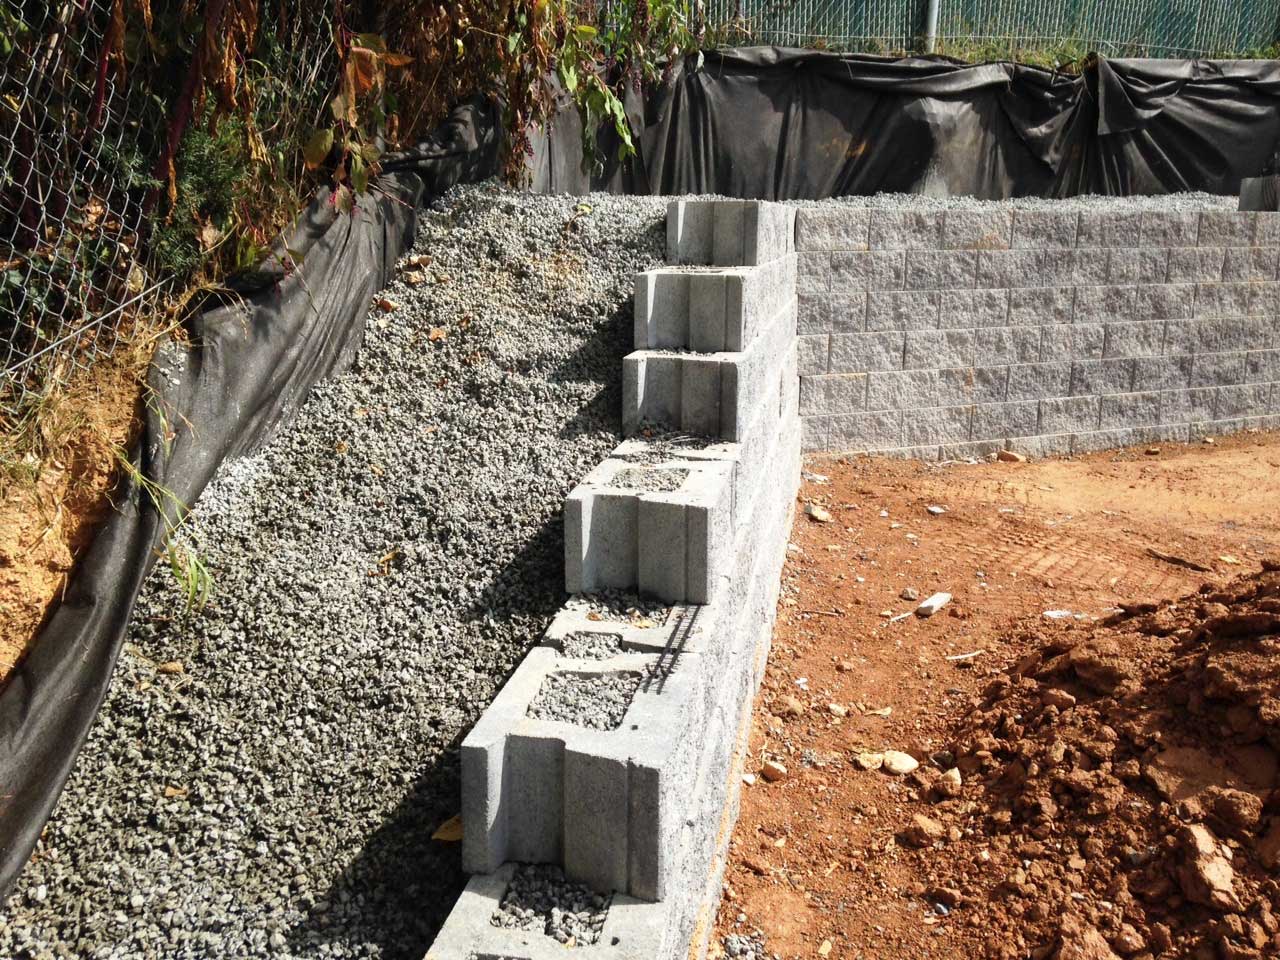 concrete block walls